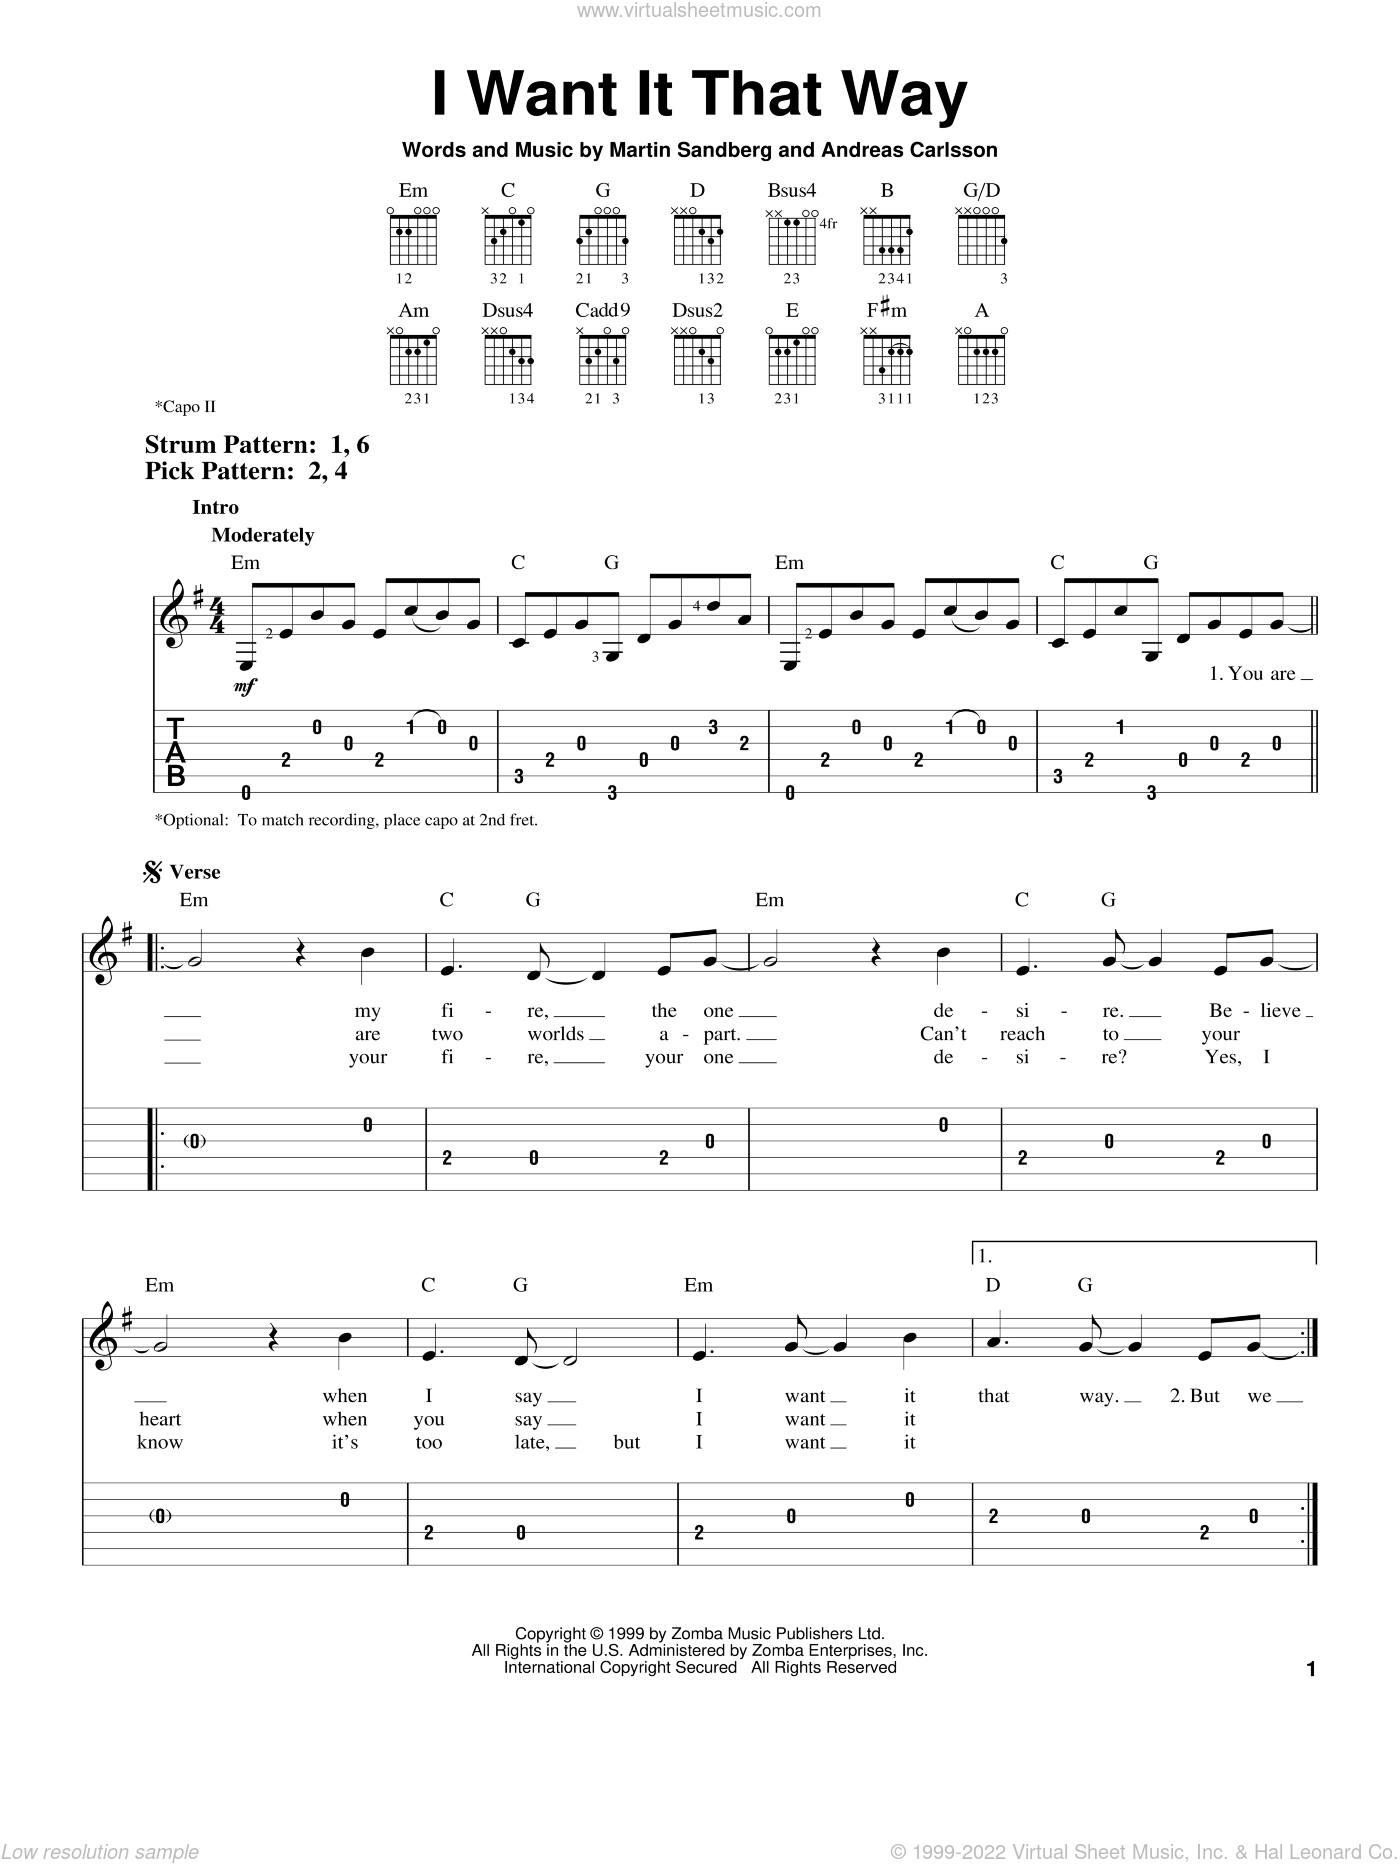 I want it that way – Backstreet Boys Sheet music for Piano, Violin